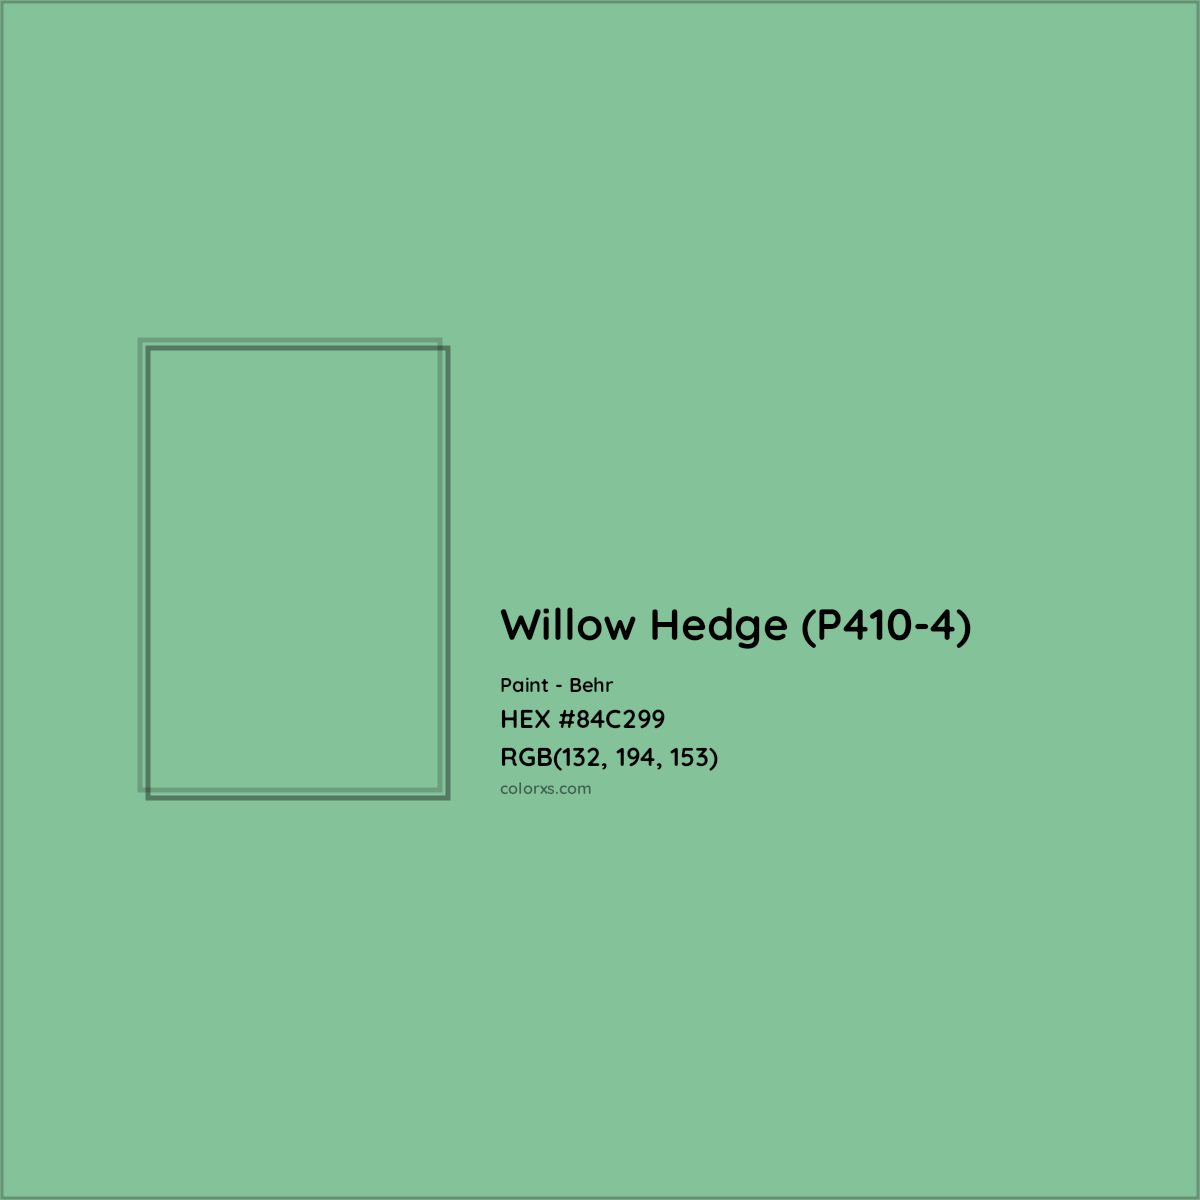 HEX #84C299 Willow Hedge (P410-4) Paint Behr - Color Code